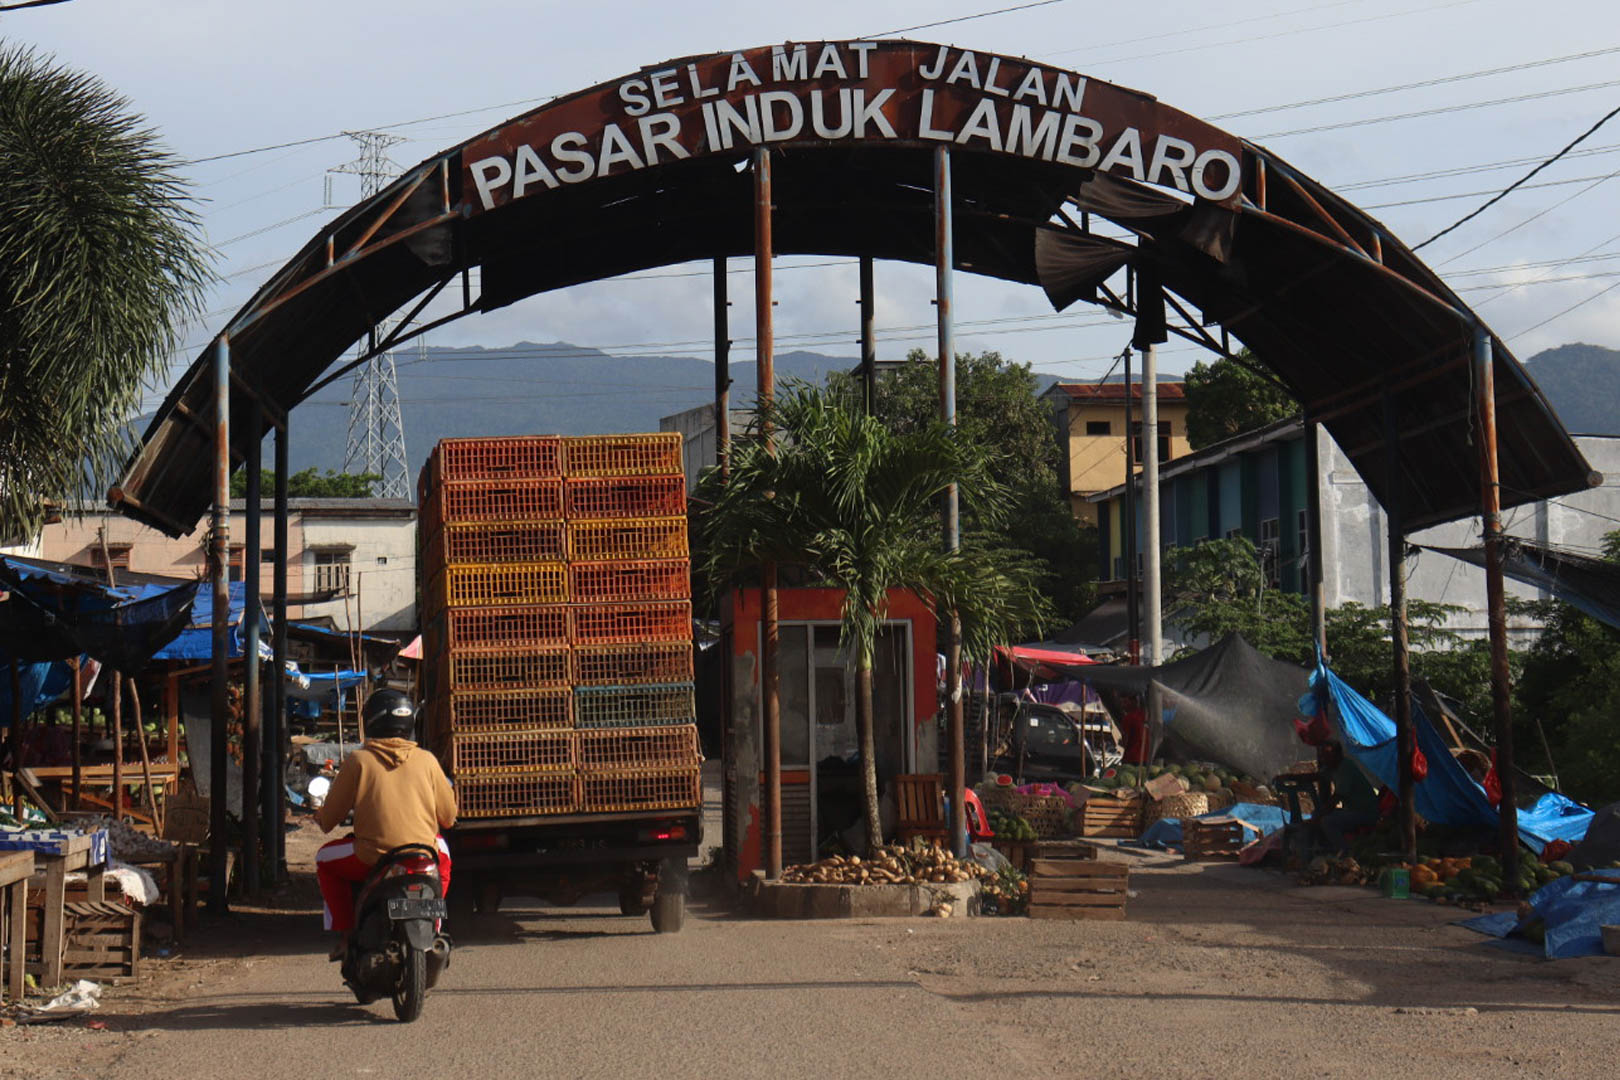 Pasar Induk Lambaro adalah pasar terbesar di Aceh. Pasar ini menjual berbagai jenis bahan makanan, dari mulai sayuran, buah, bumbu dapur, daging, ikan, dll.